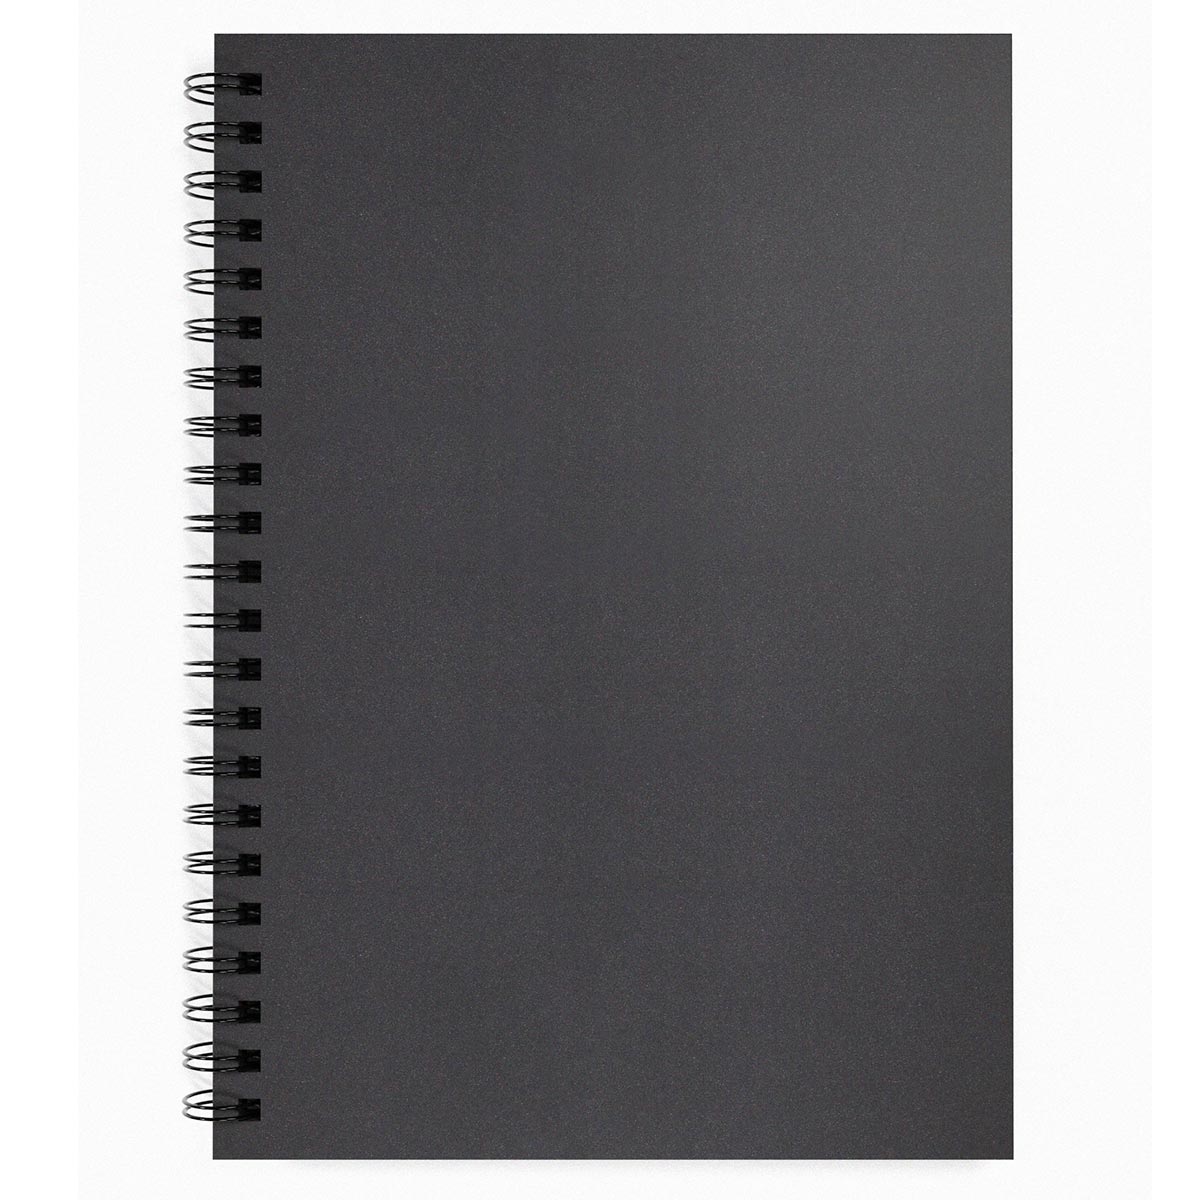 Artgecko - Shady Black Paper Sketchbook - A4 Portrait